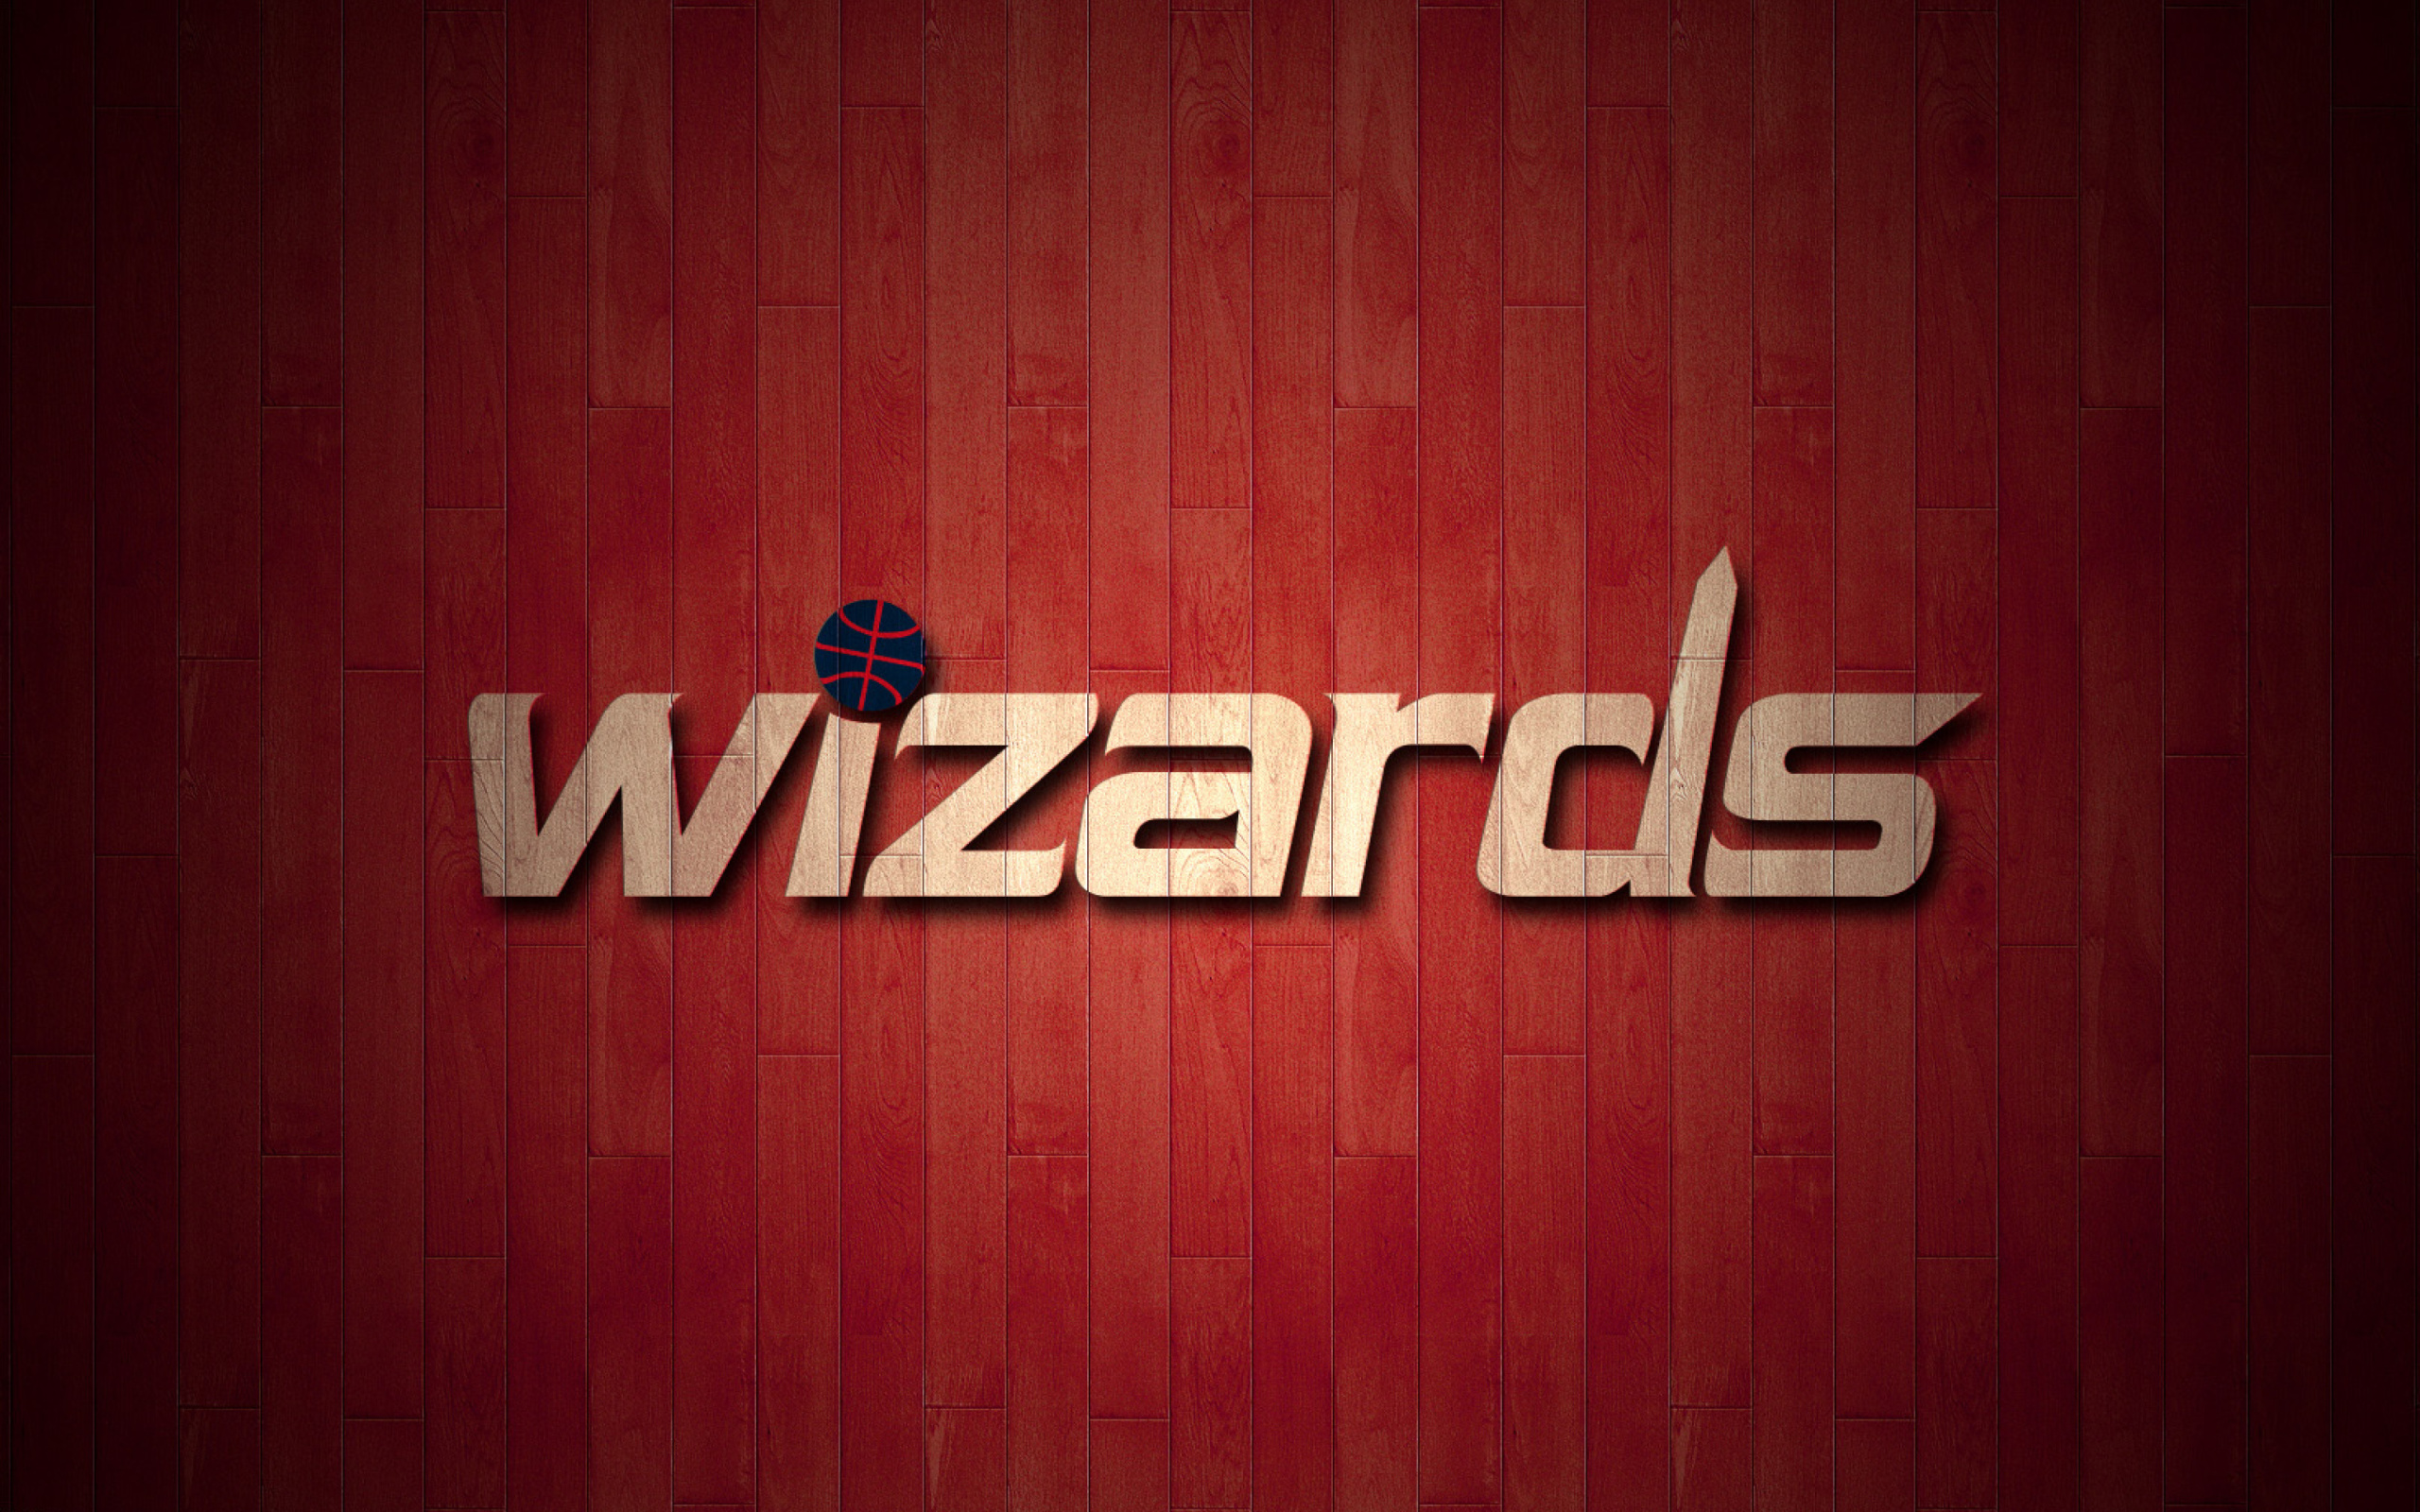 Washington Wizards wallpaper 2560x1600